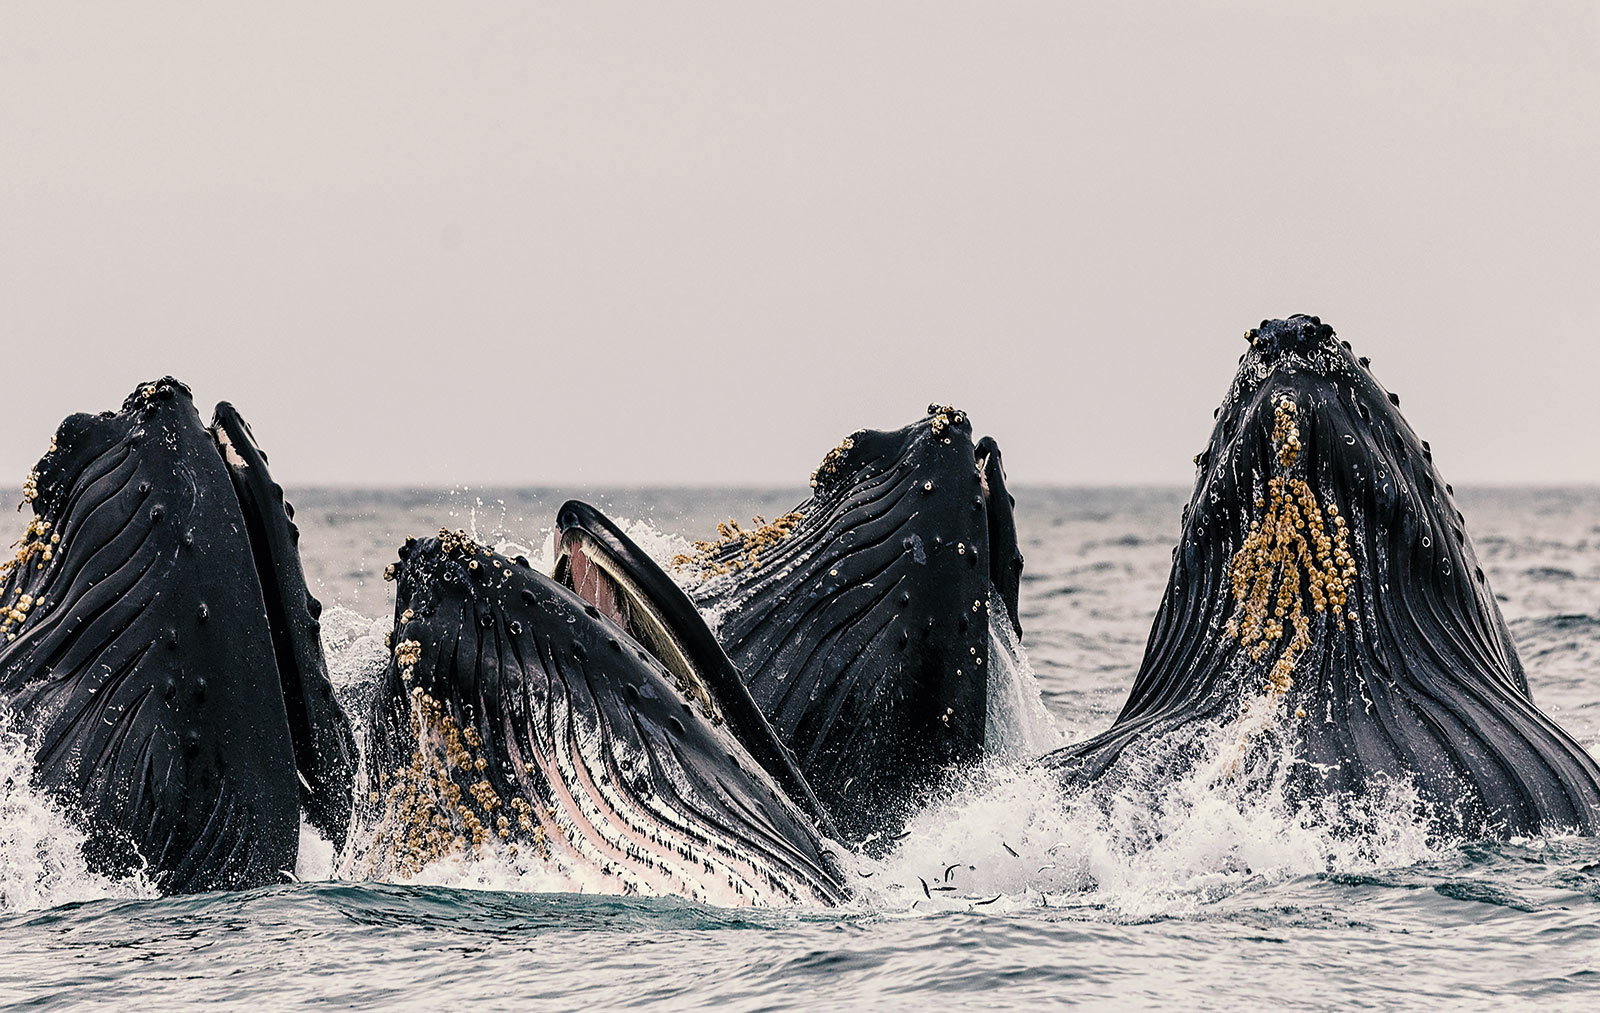 Monterey Bay California USA, Humpback whales